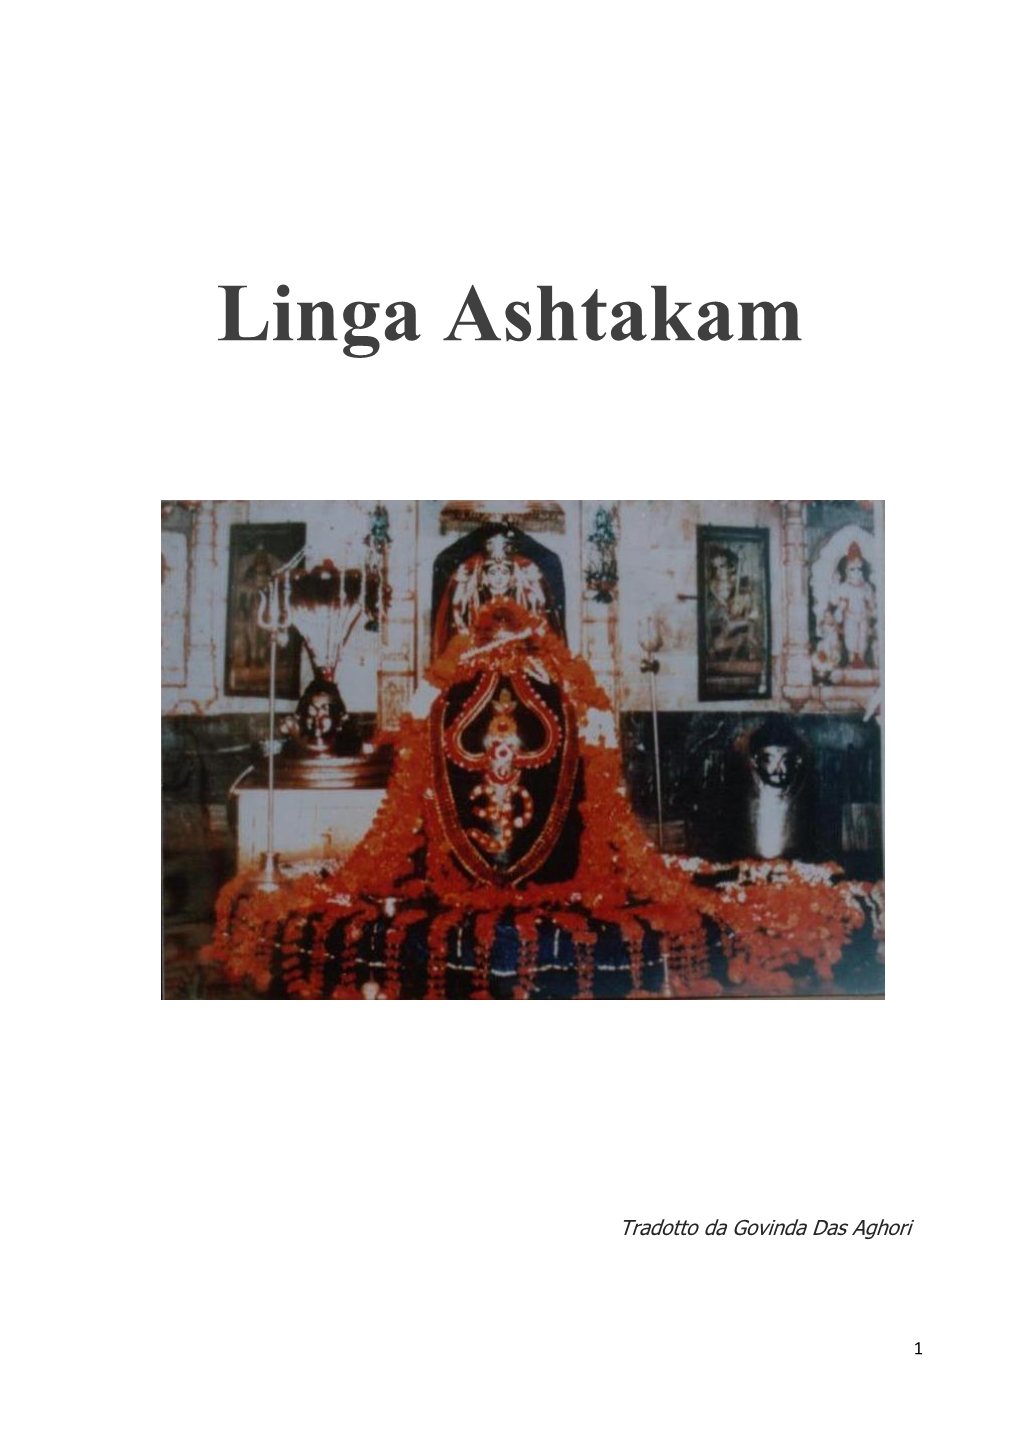 Linga Ashtakam